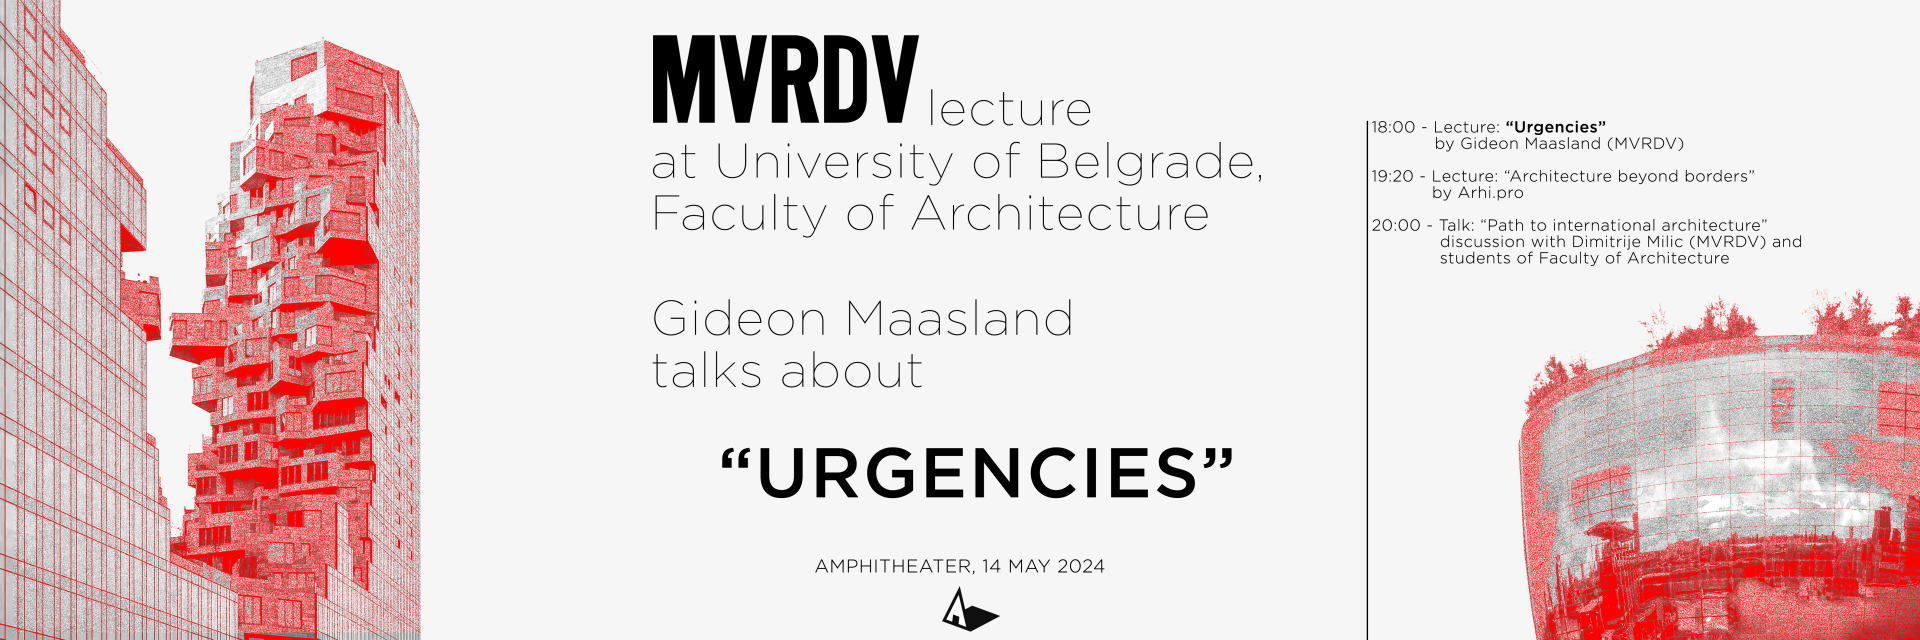 Visiting lecture MVRDV “URGENCIES” Gideon Maasland